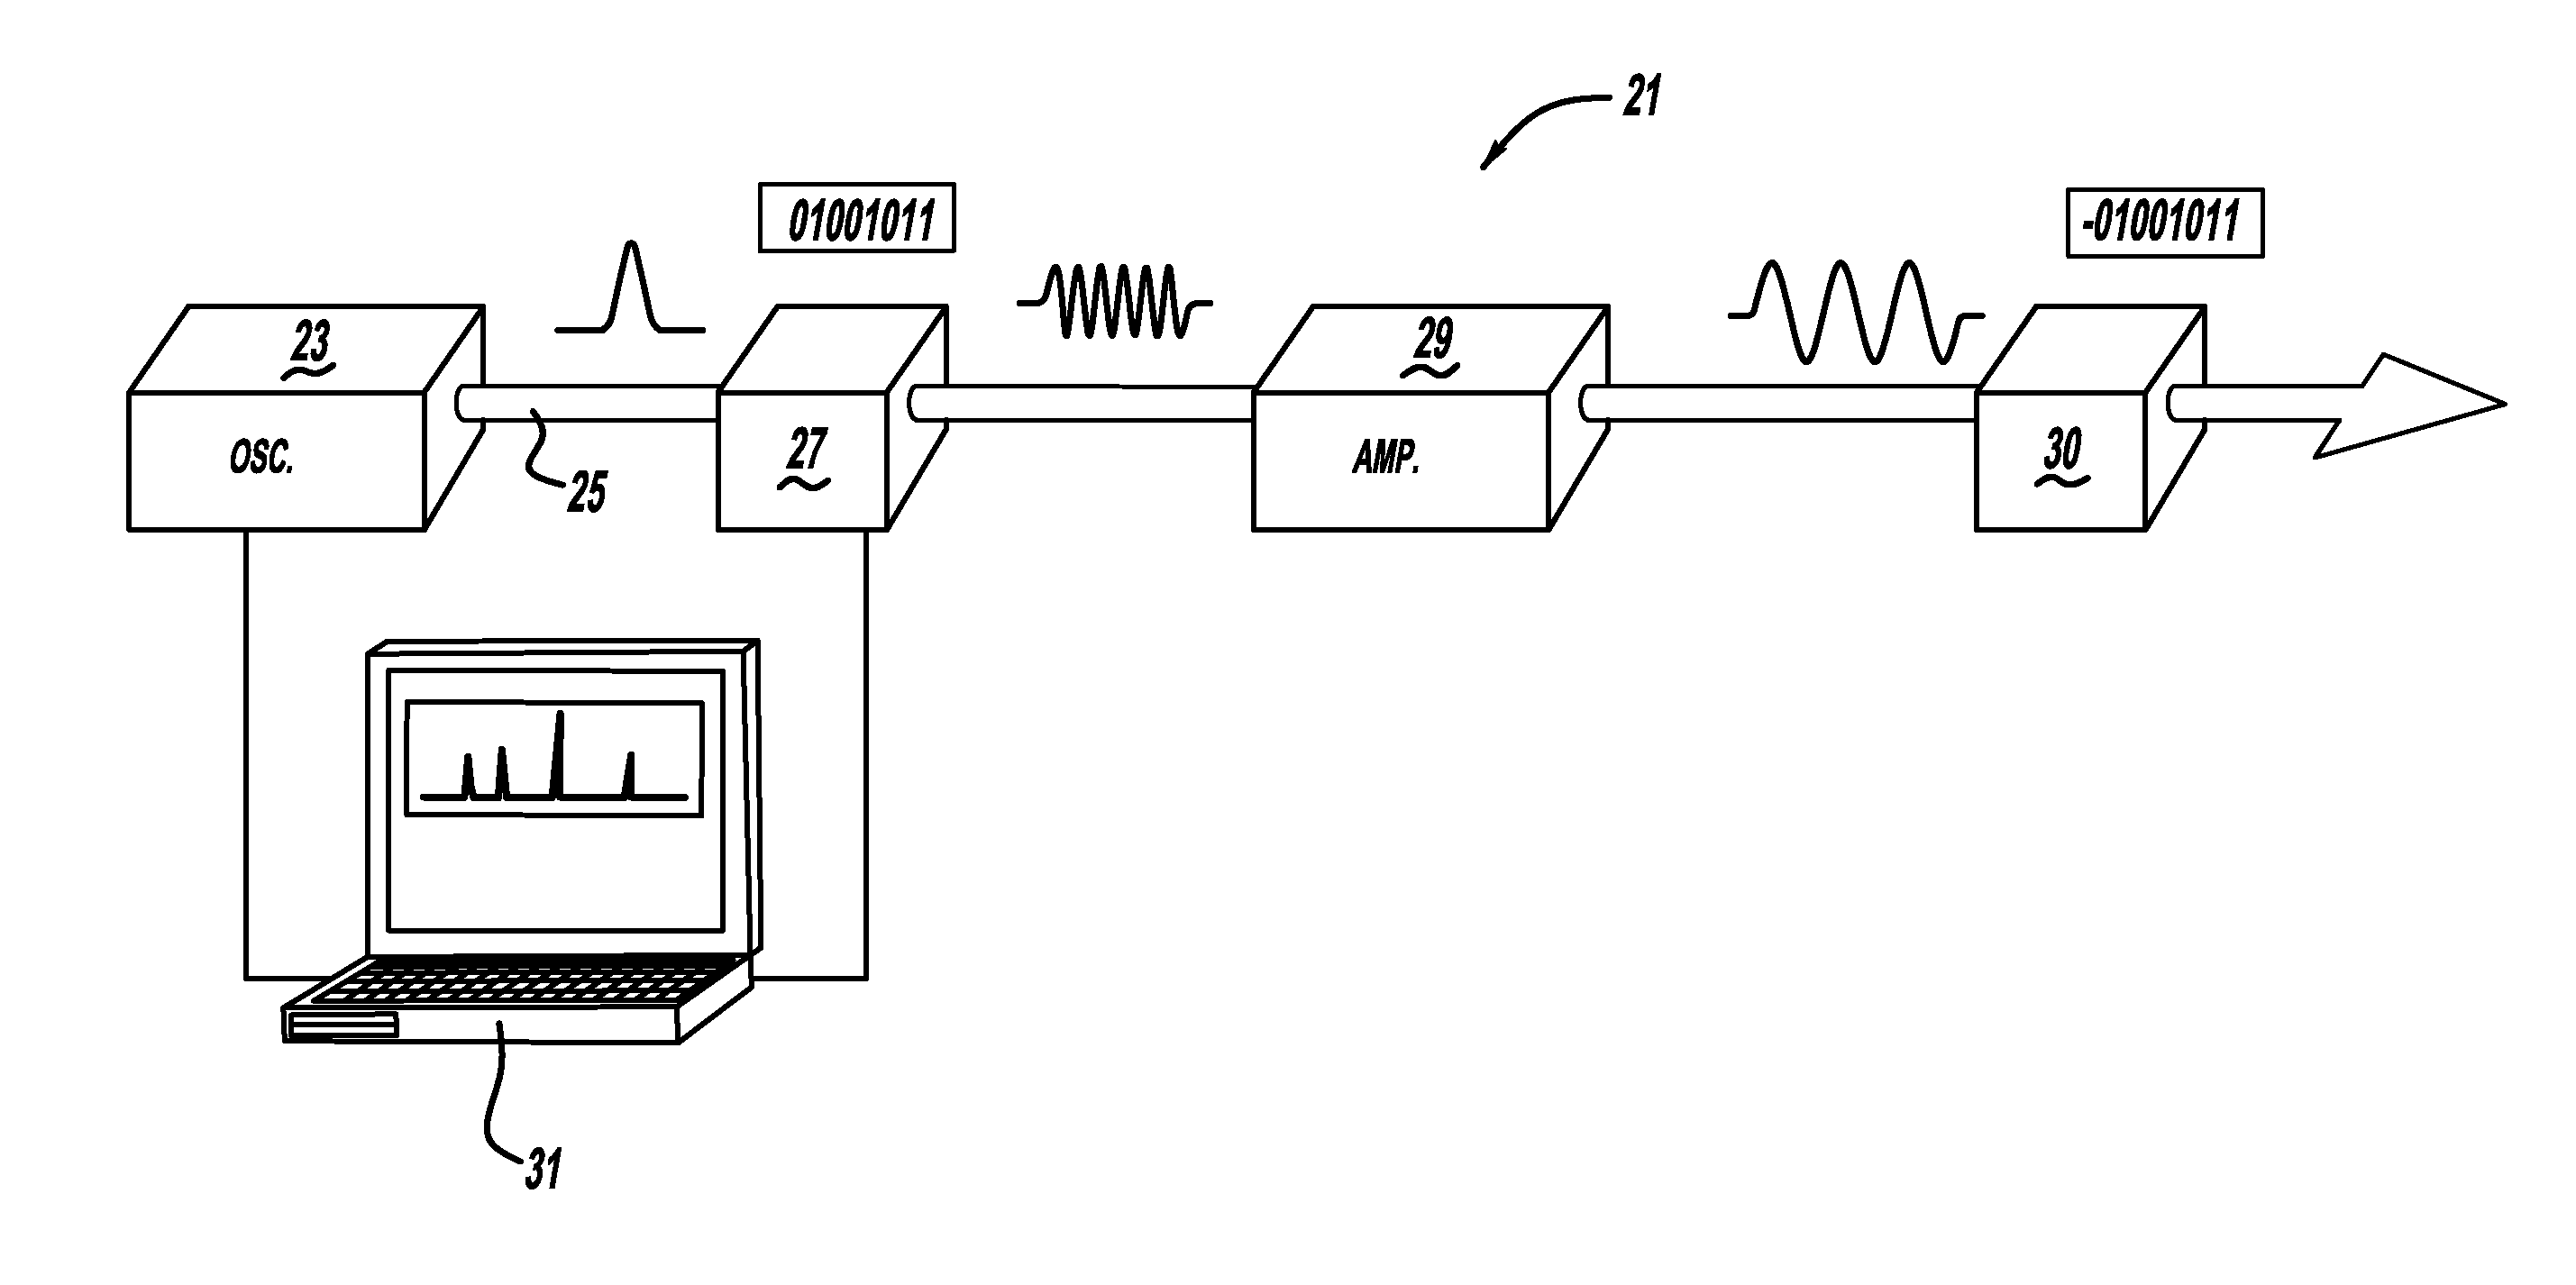 Laser amplification system